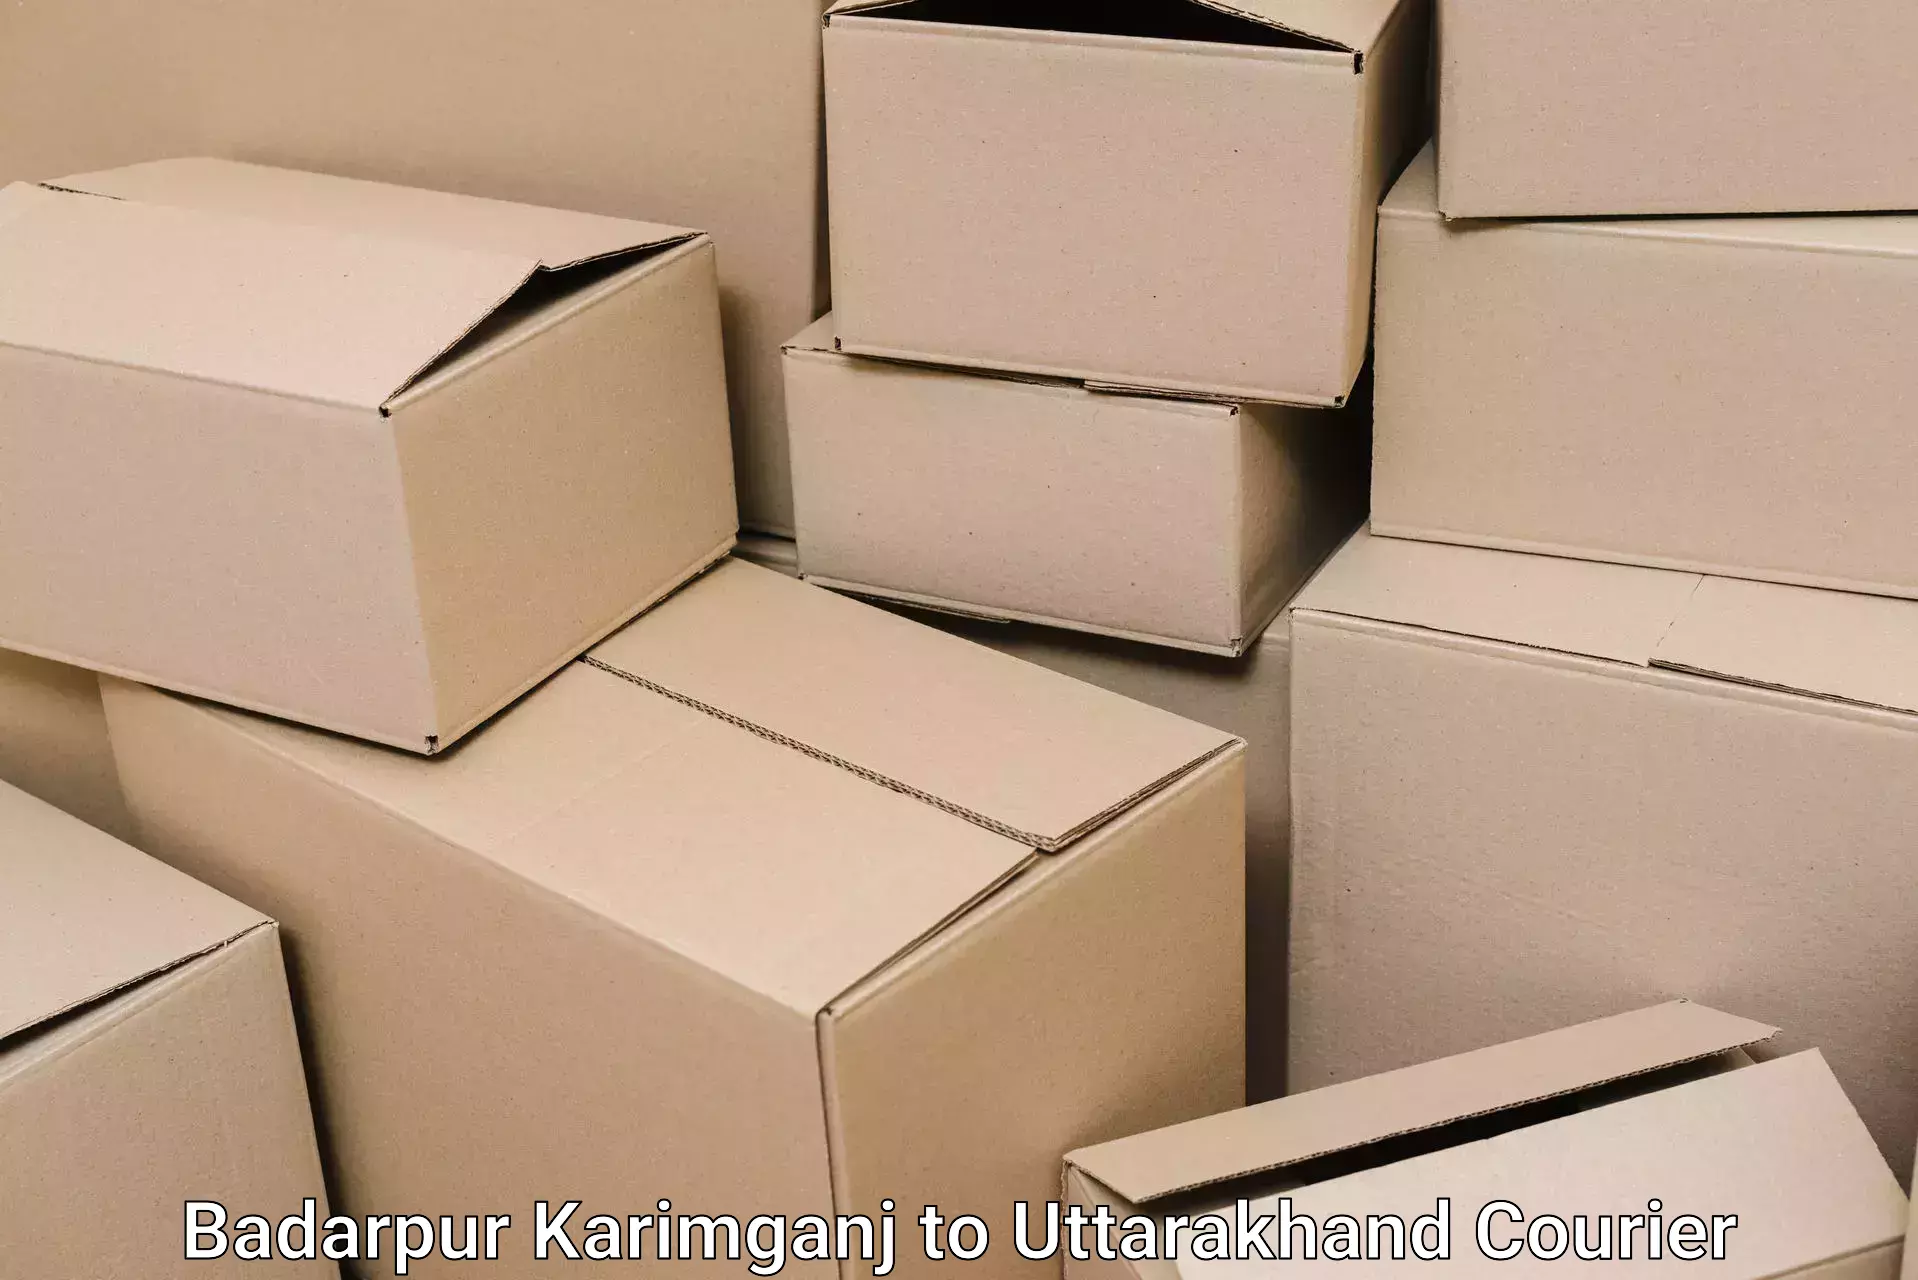 Quality moving and storage Badarpur Karimganj to Doiwala